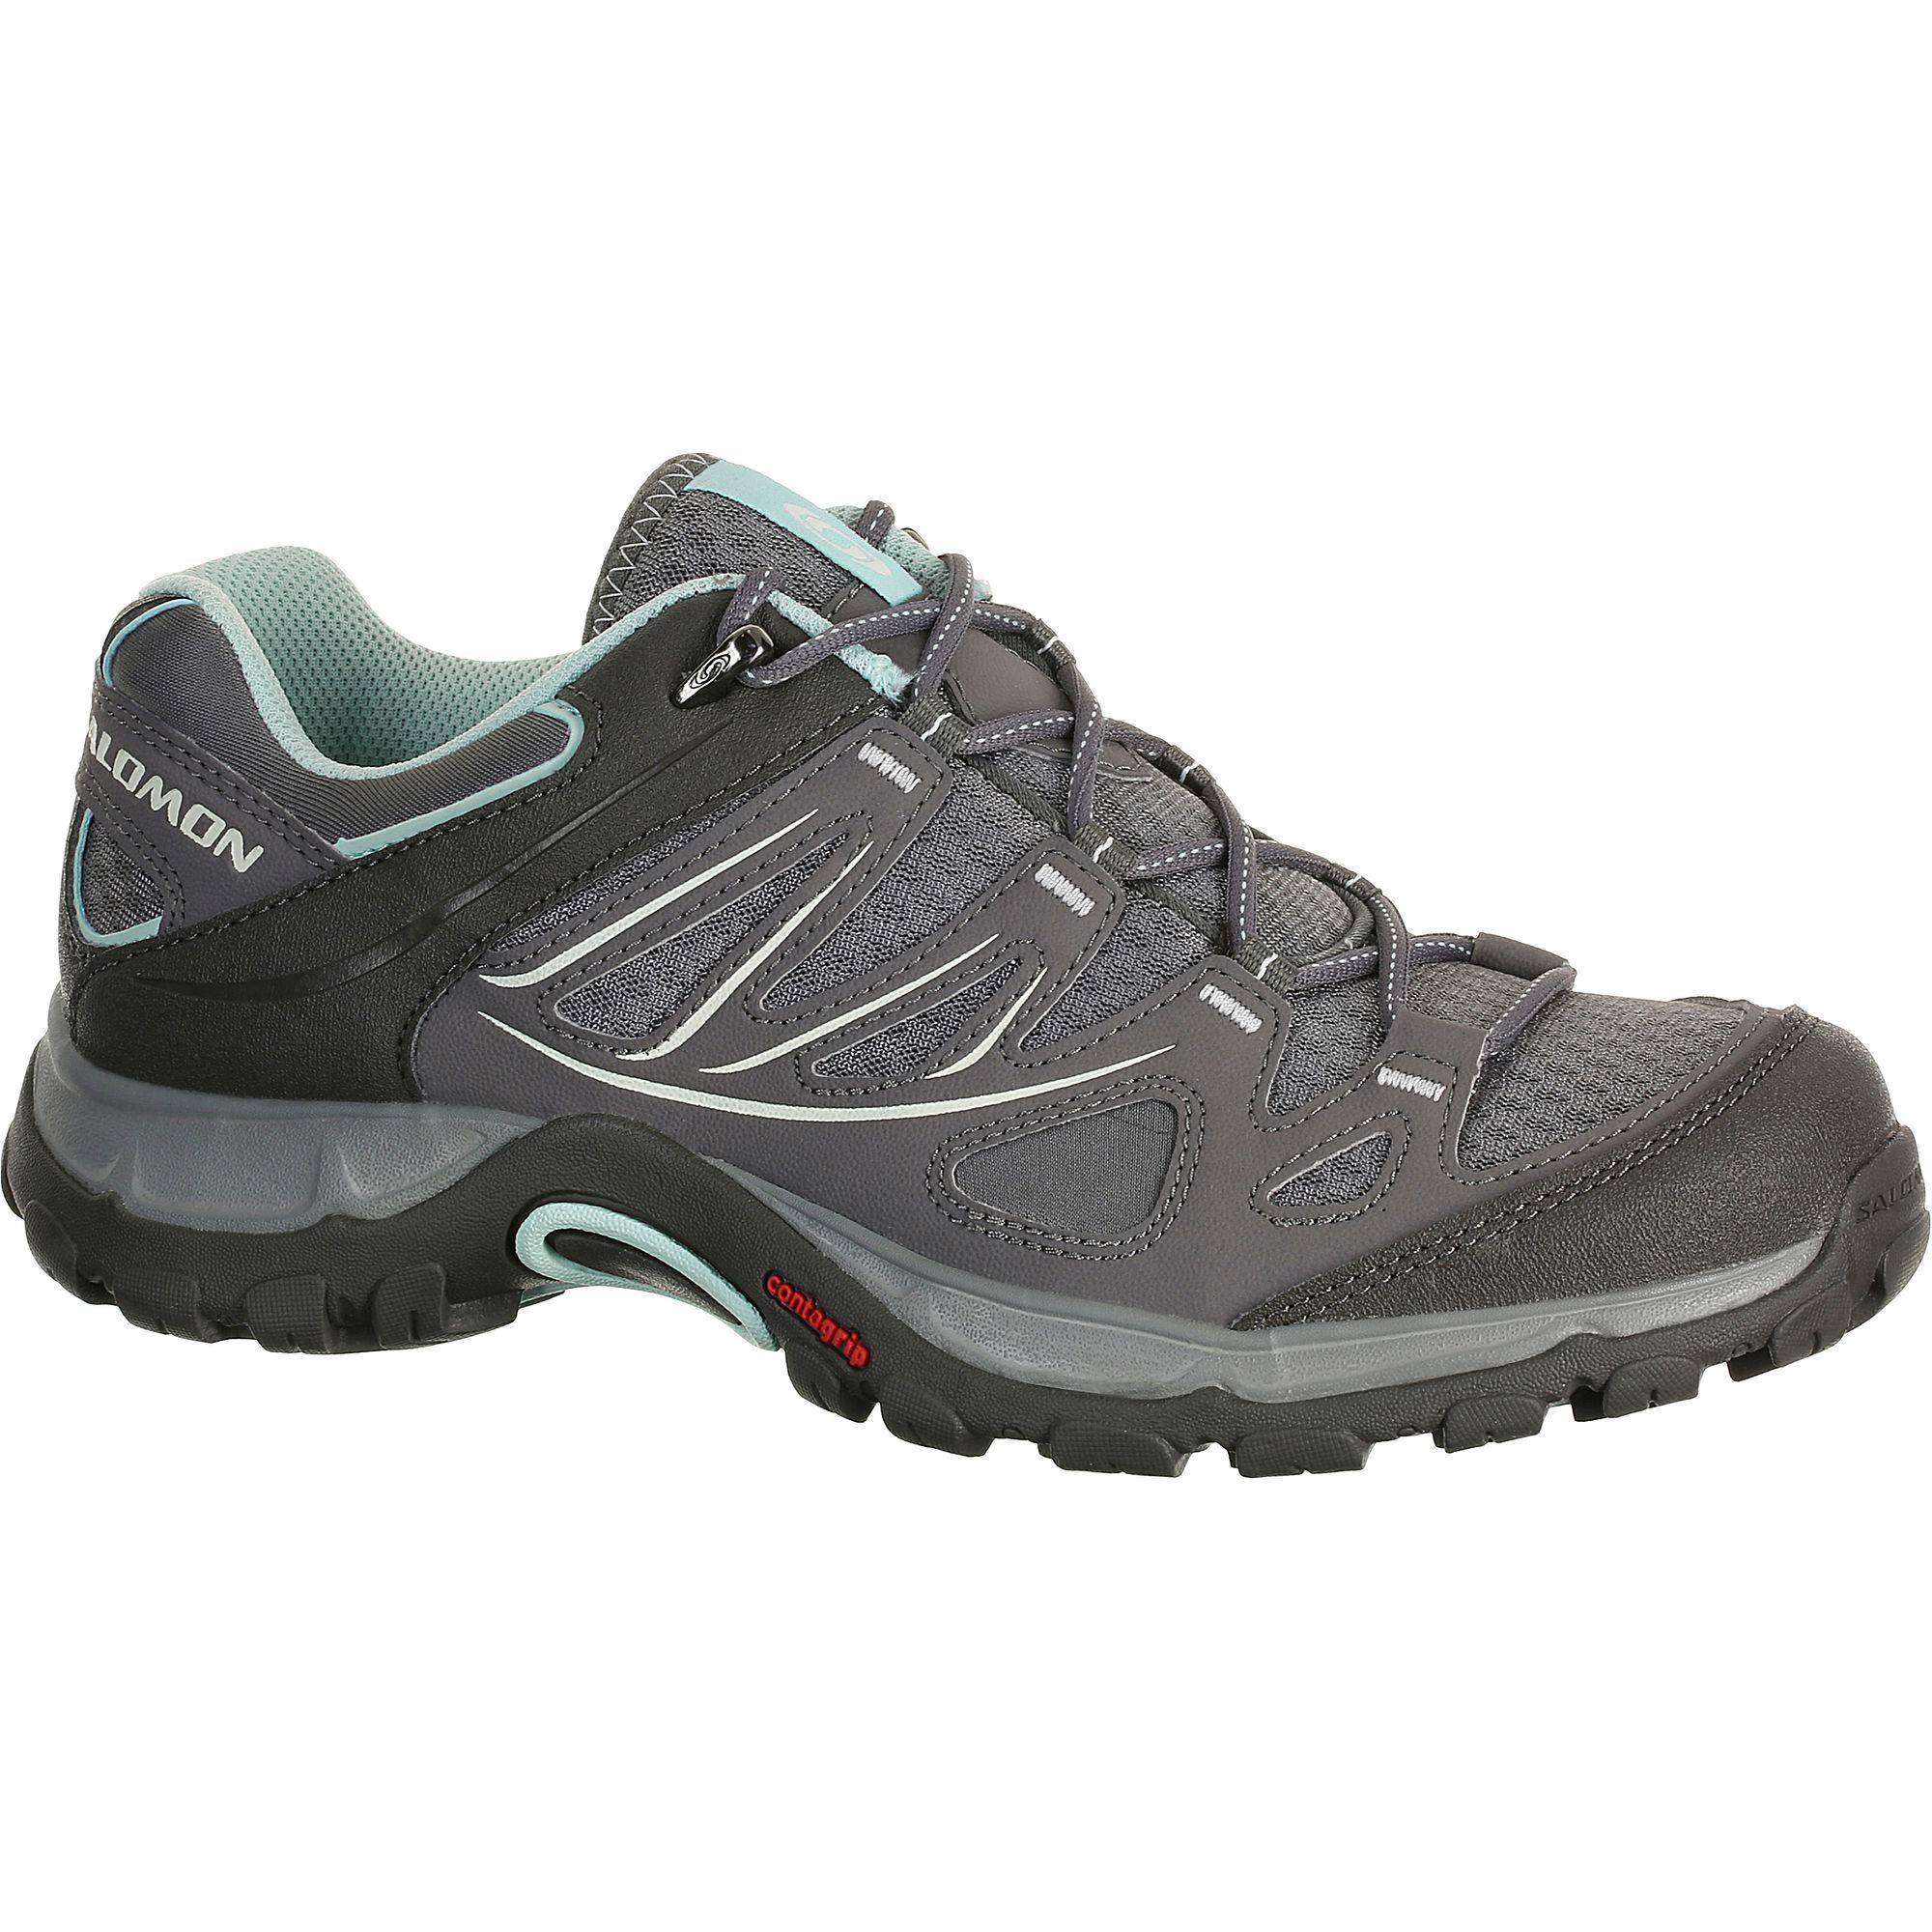 SALOMON Salomon Ellipse Aero Women's Hiking Shoes - Grey/blue